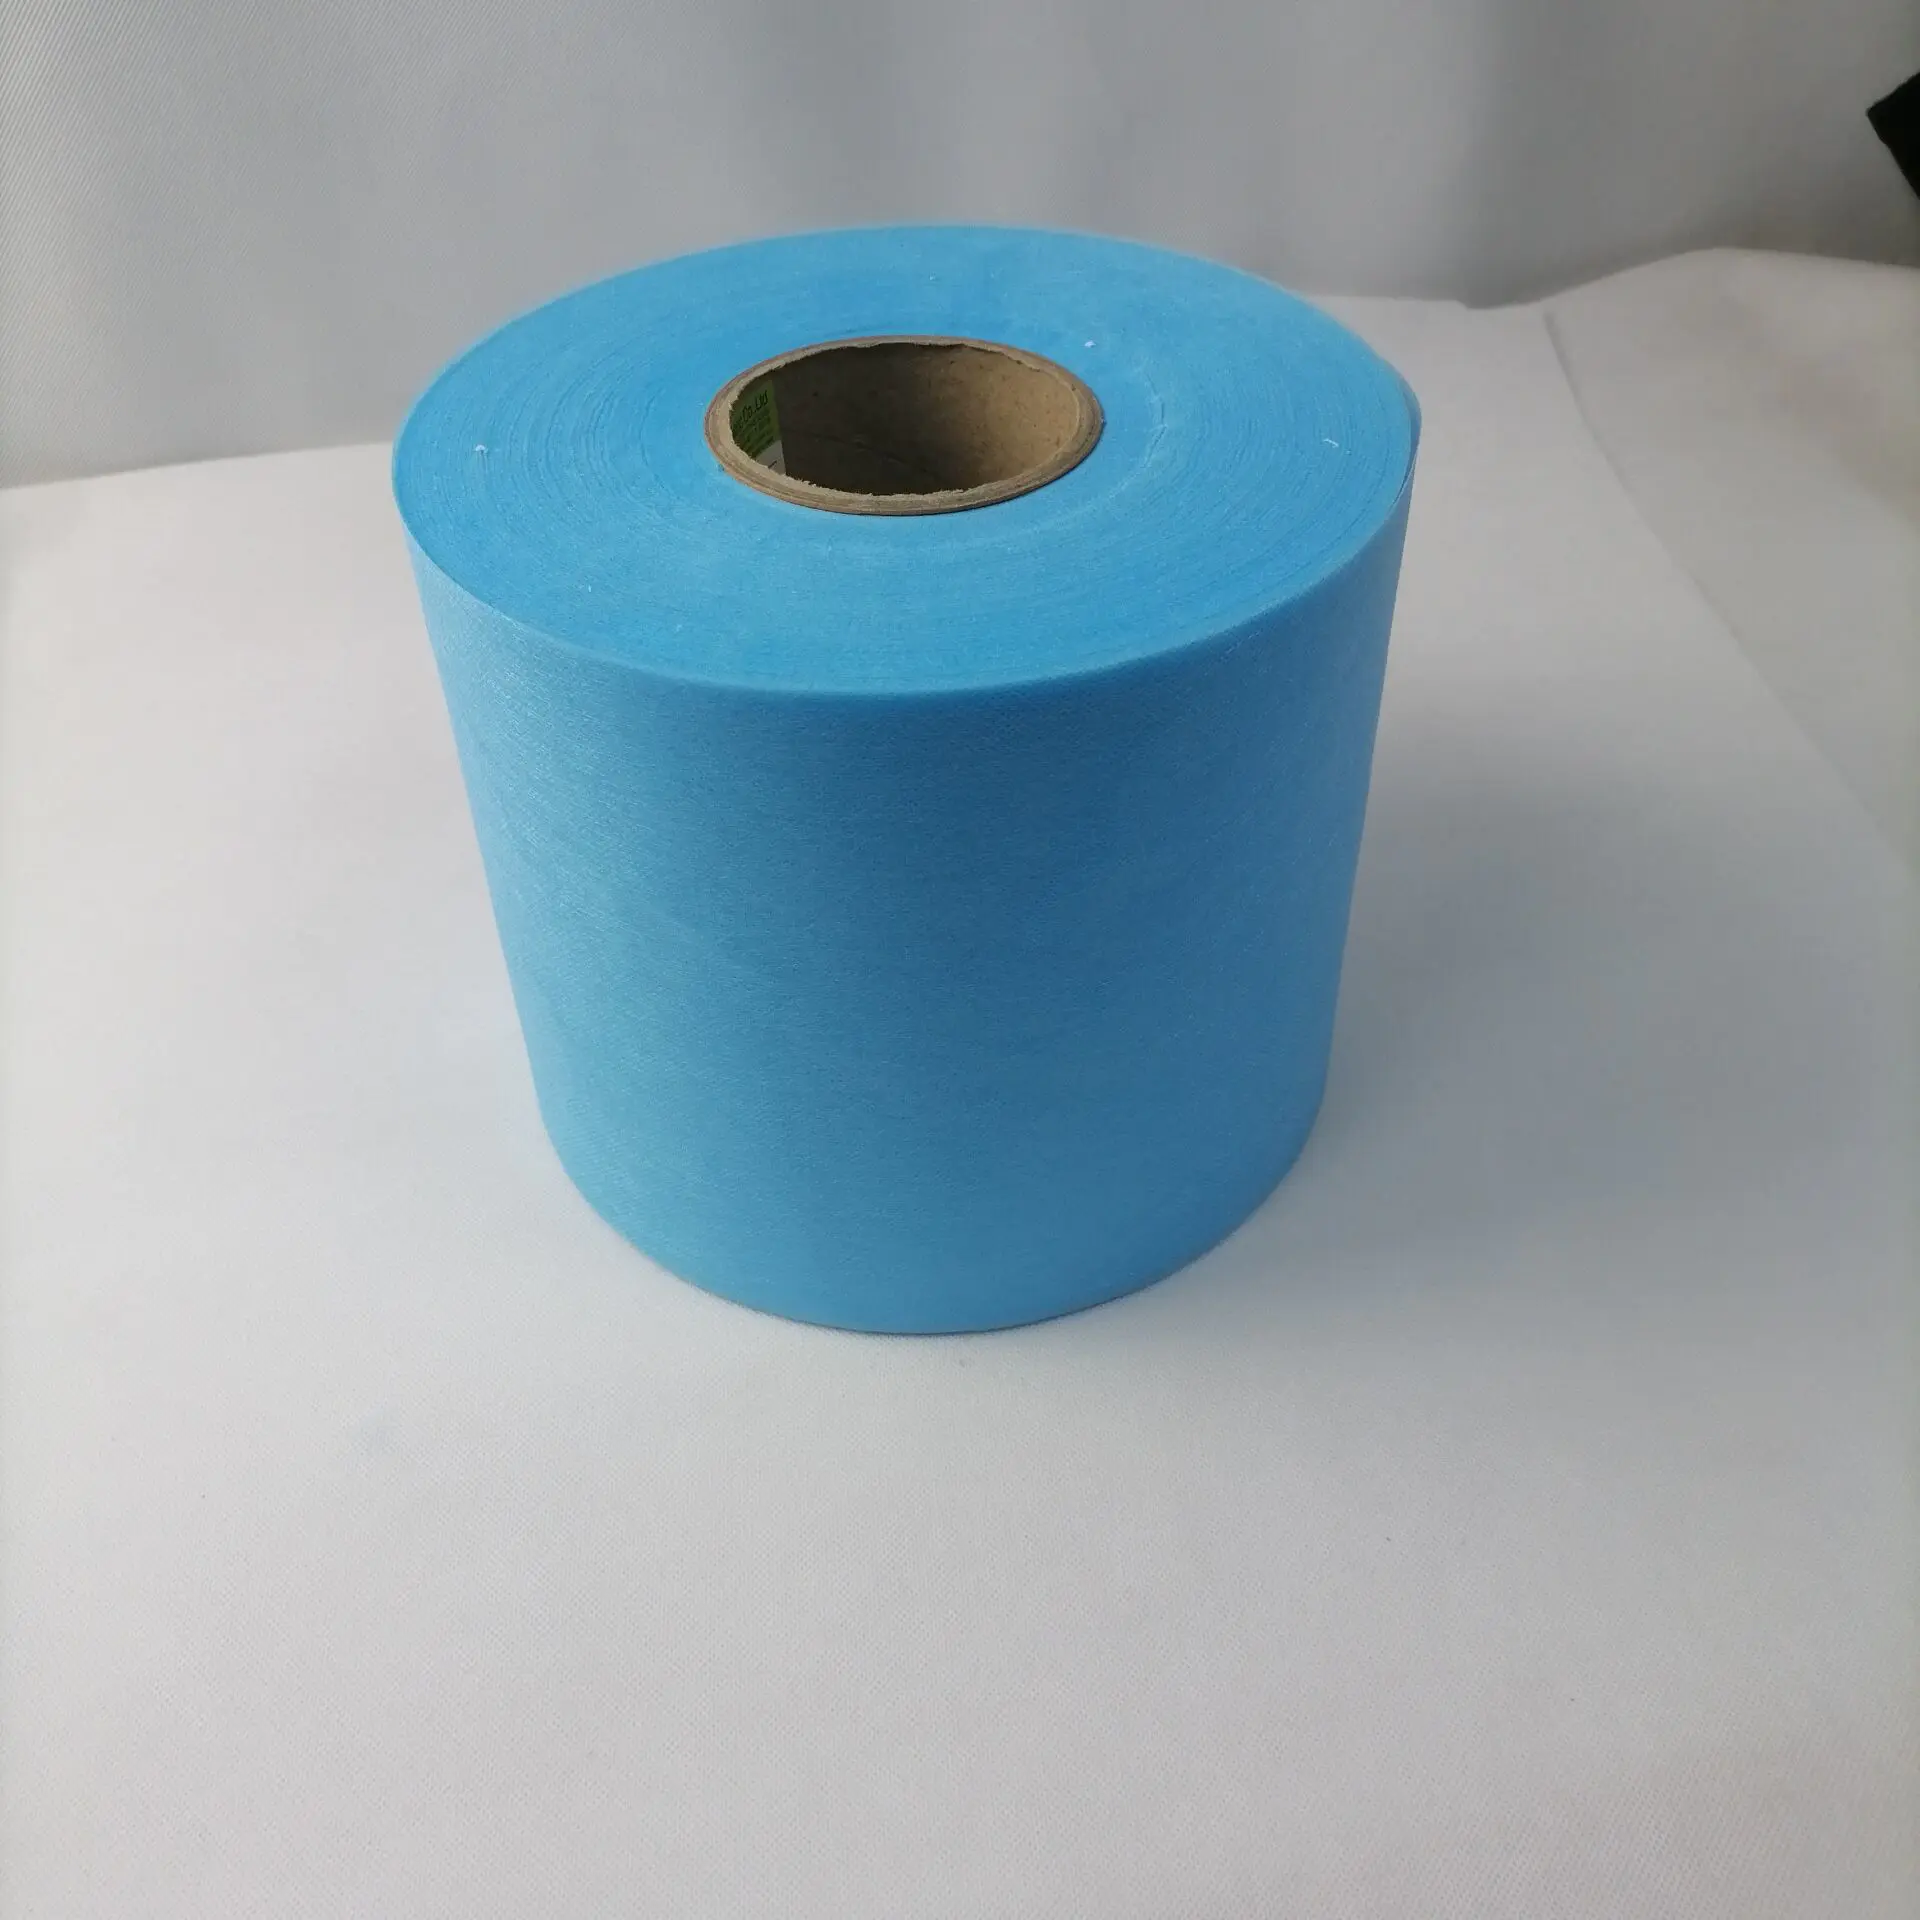 spunbond polypropylene non-woven fabric for making masks